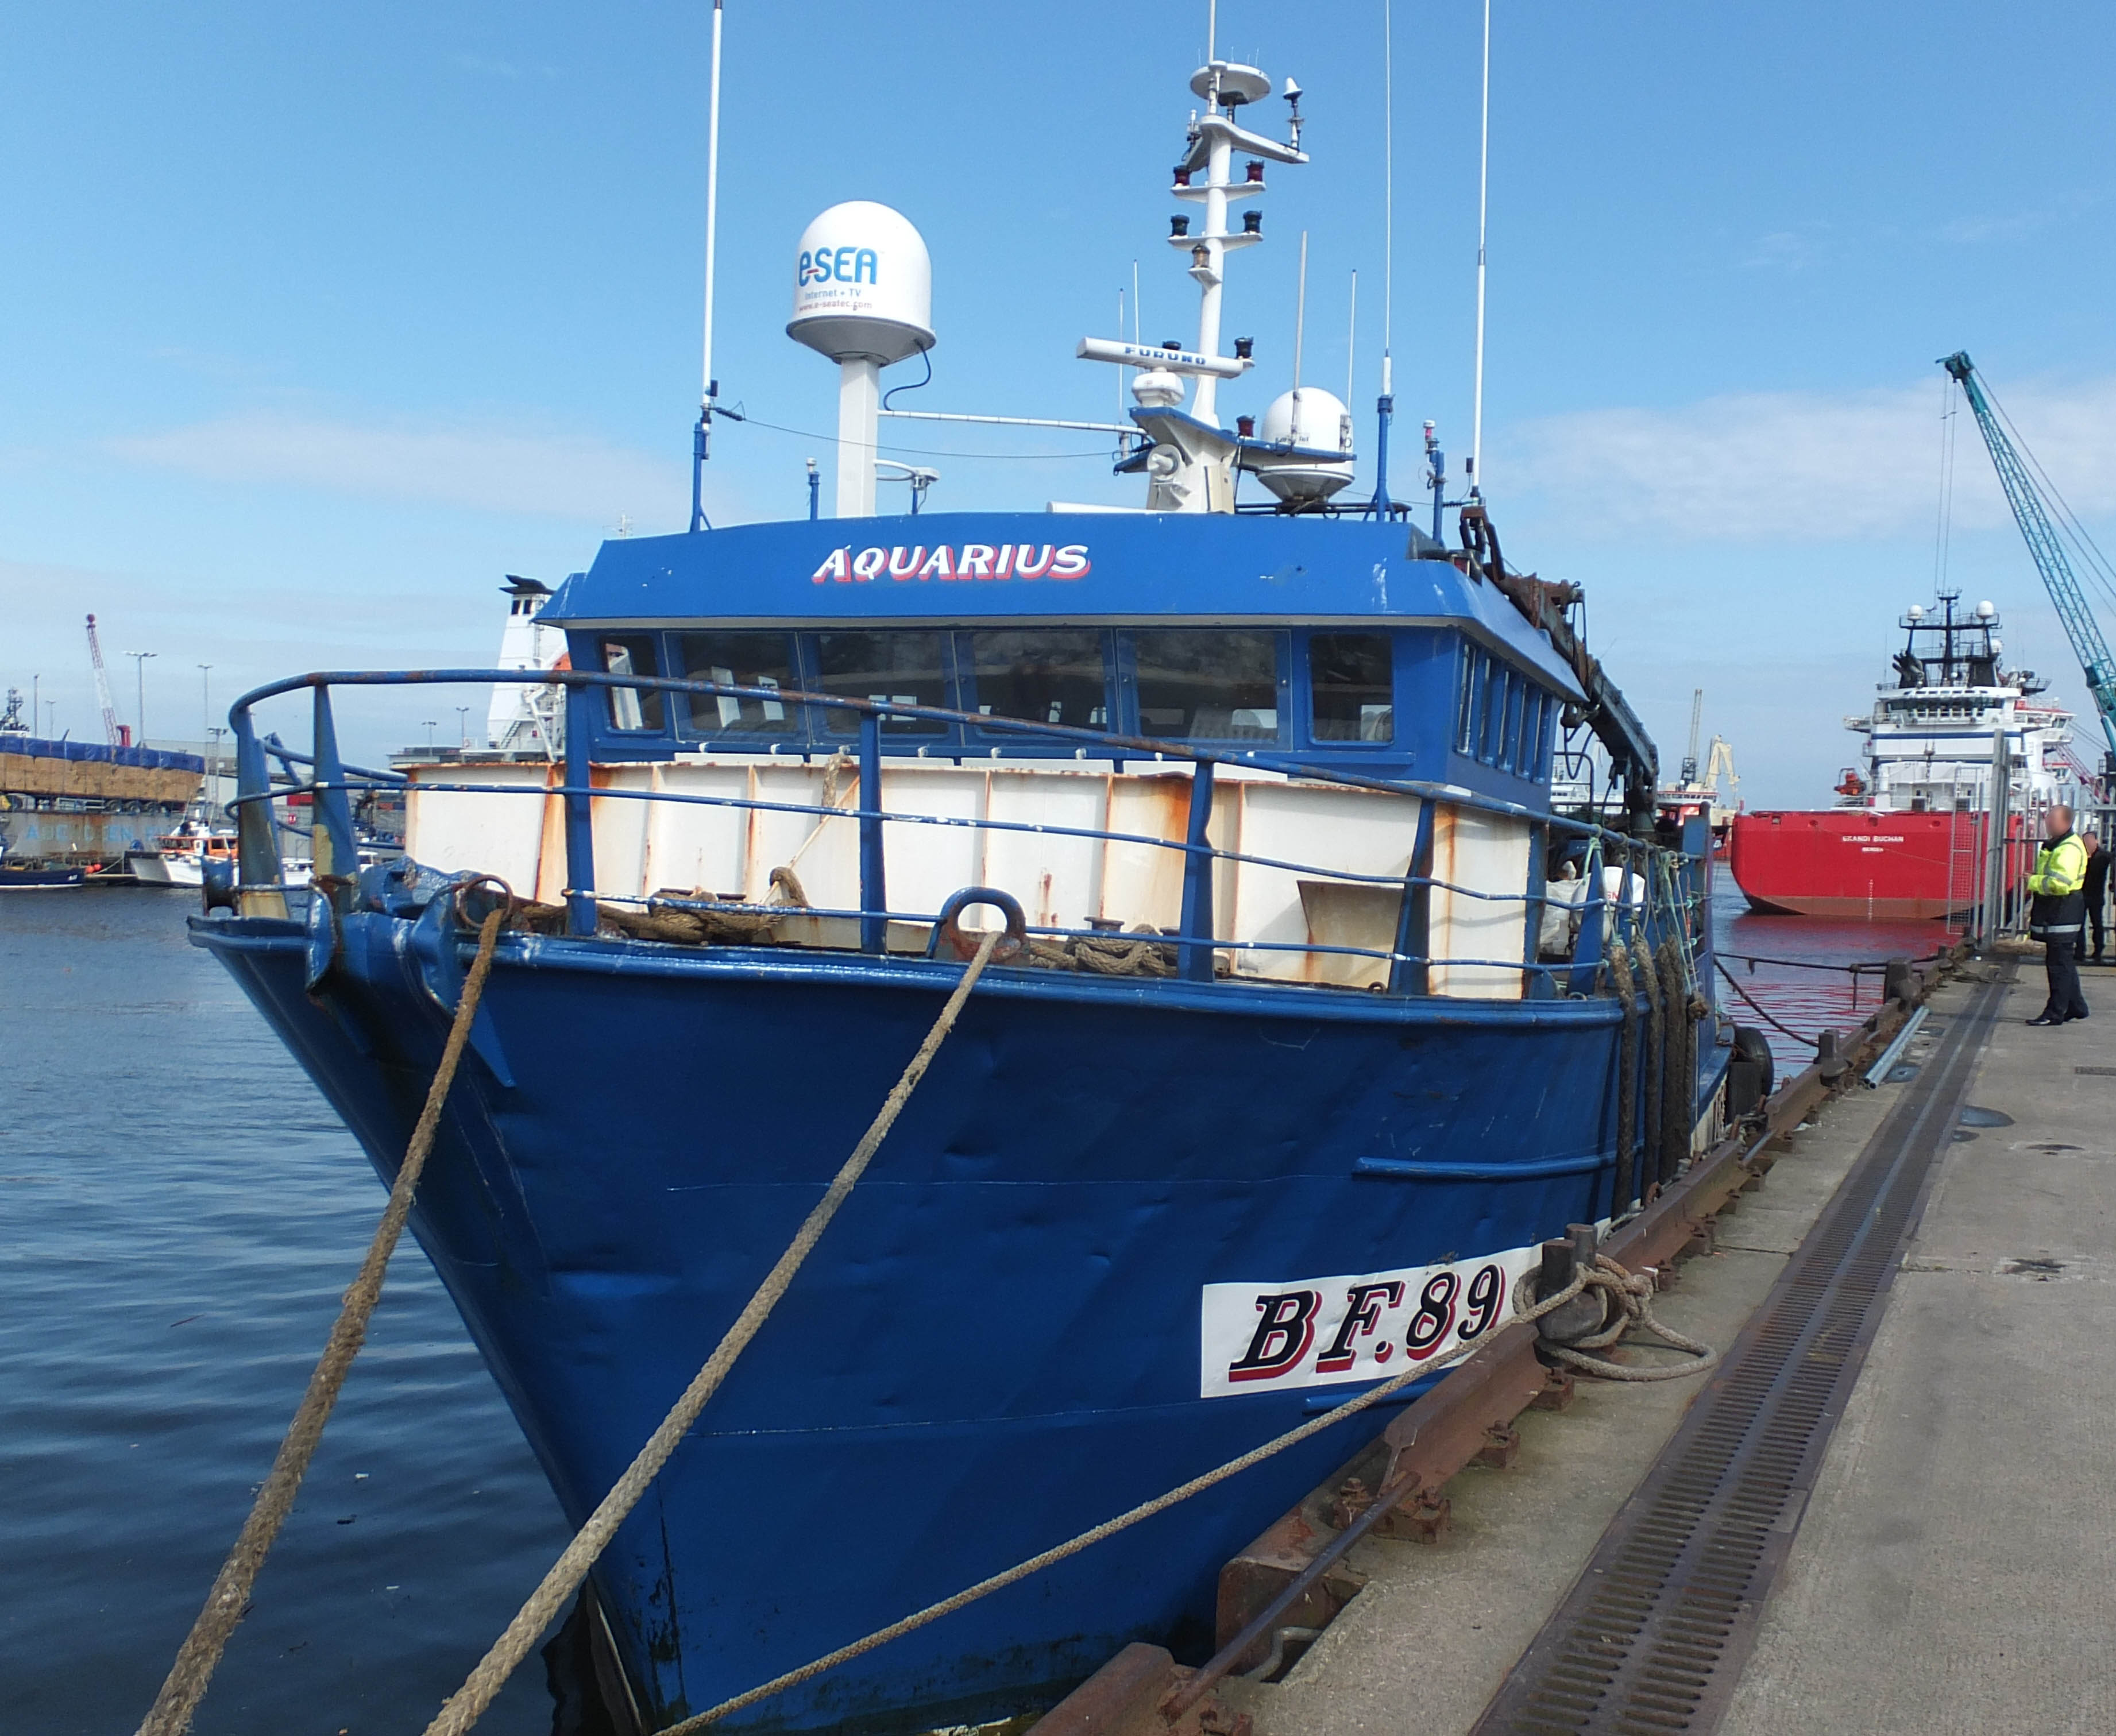 Photograph of Aquarius alongside at Aberdeen